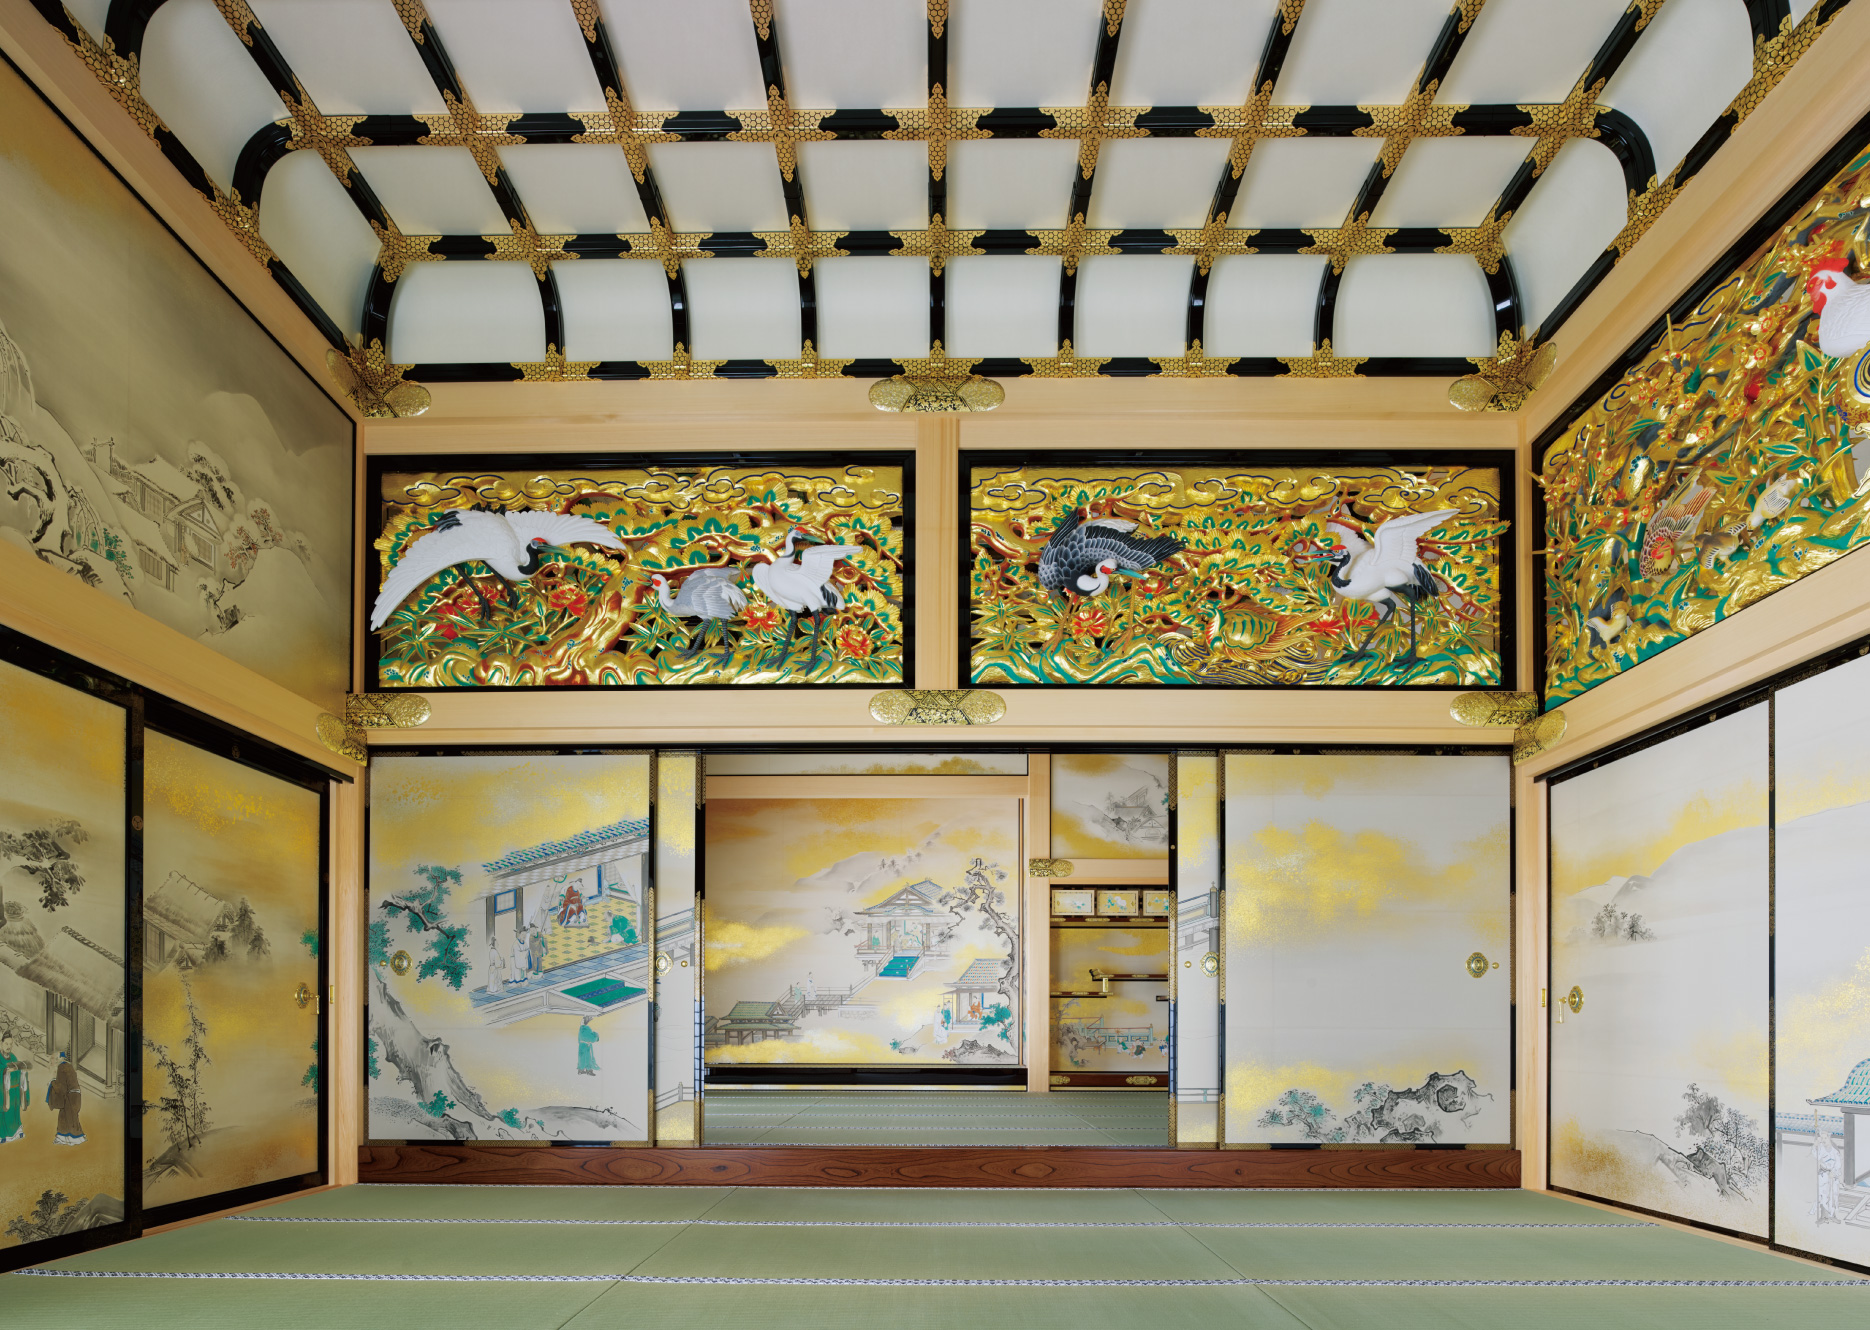 Picture of Jorakuden,, Shogun Accomodation Facilities